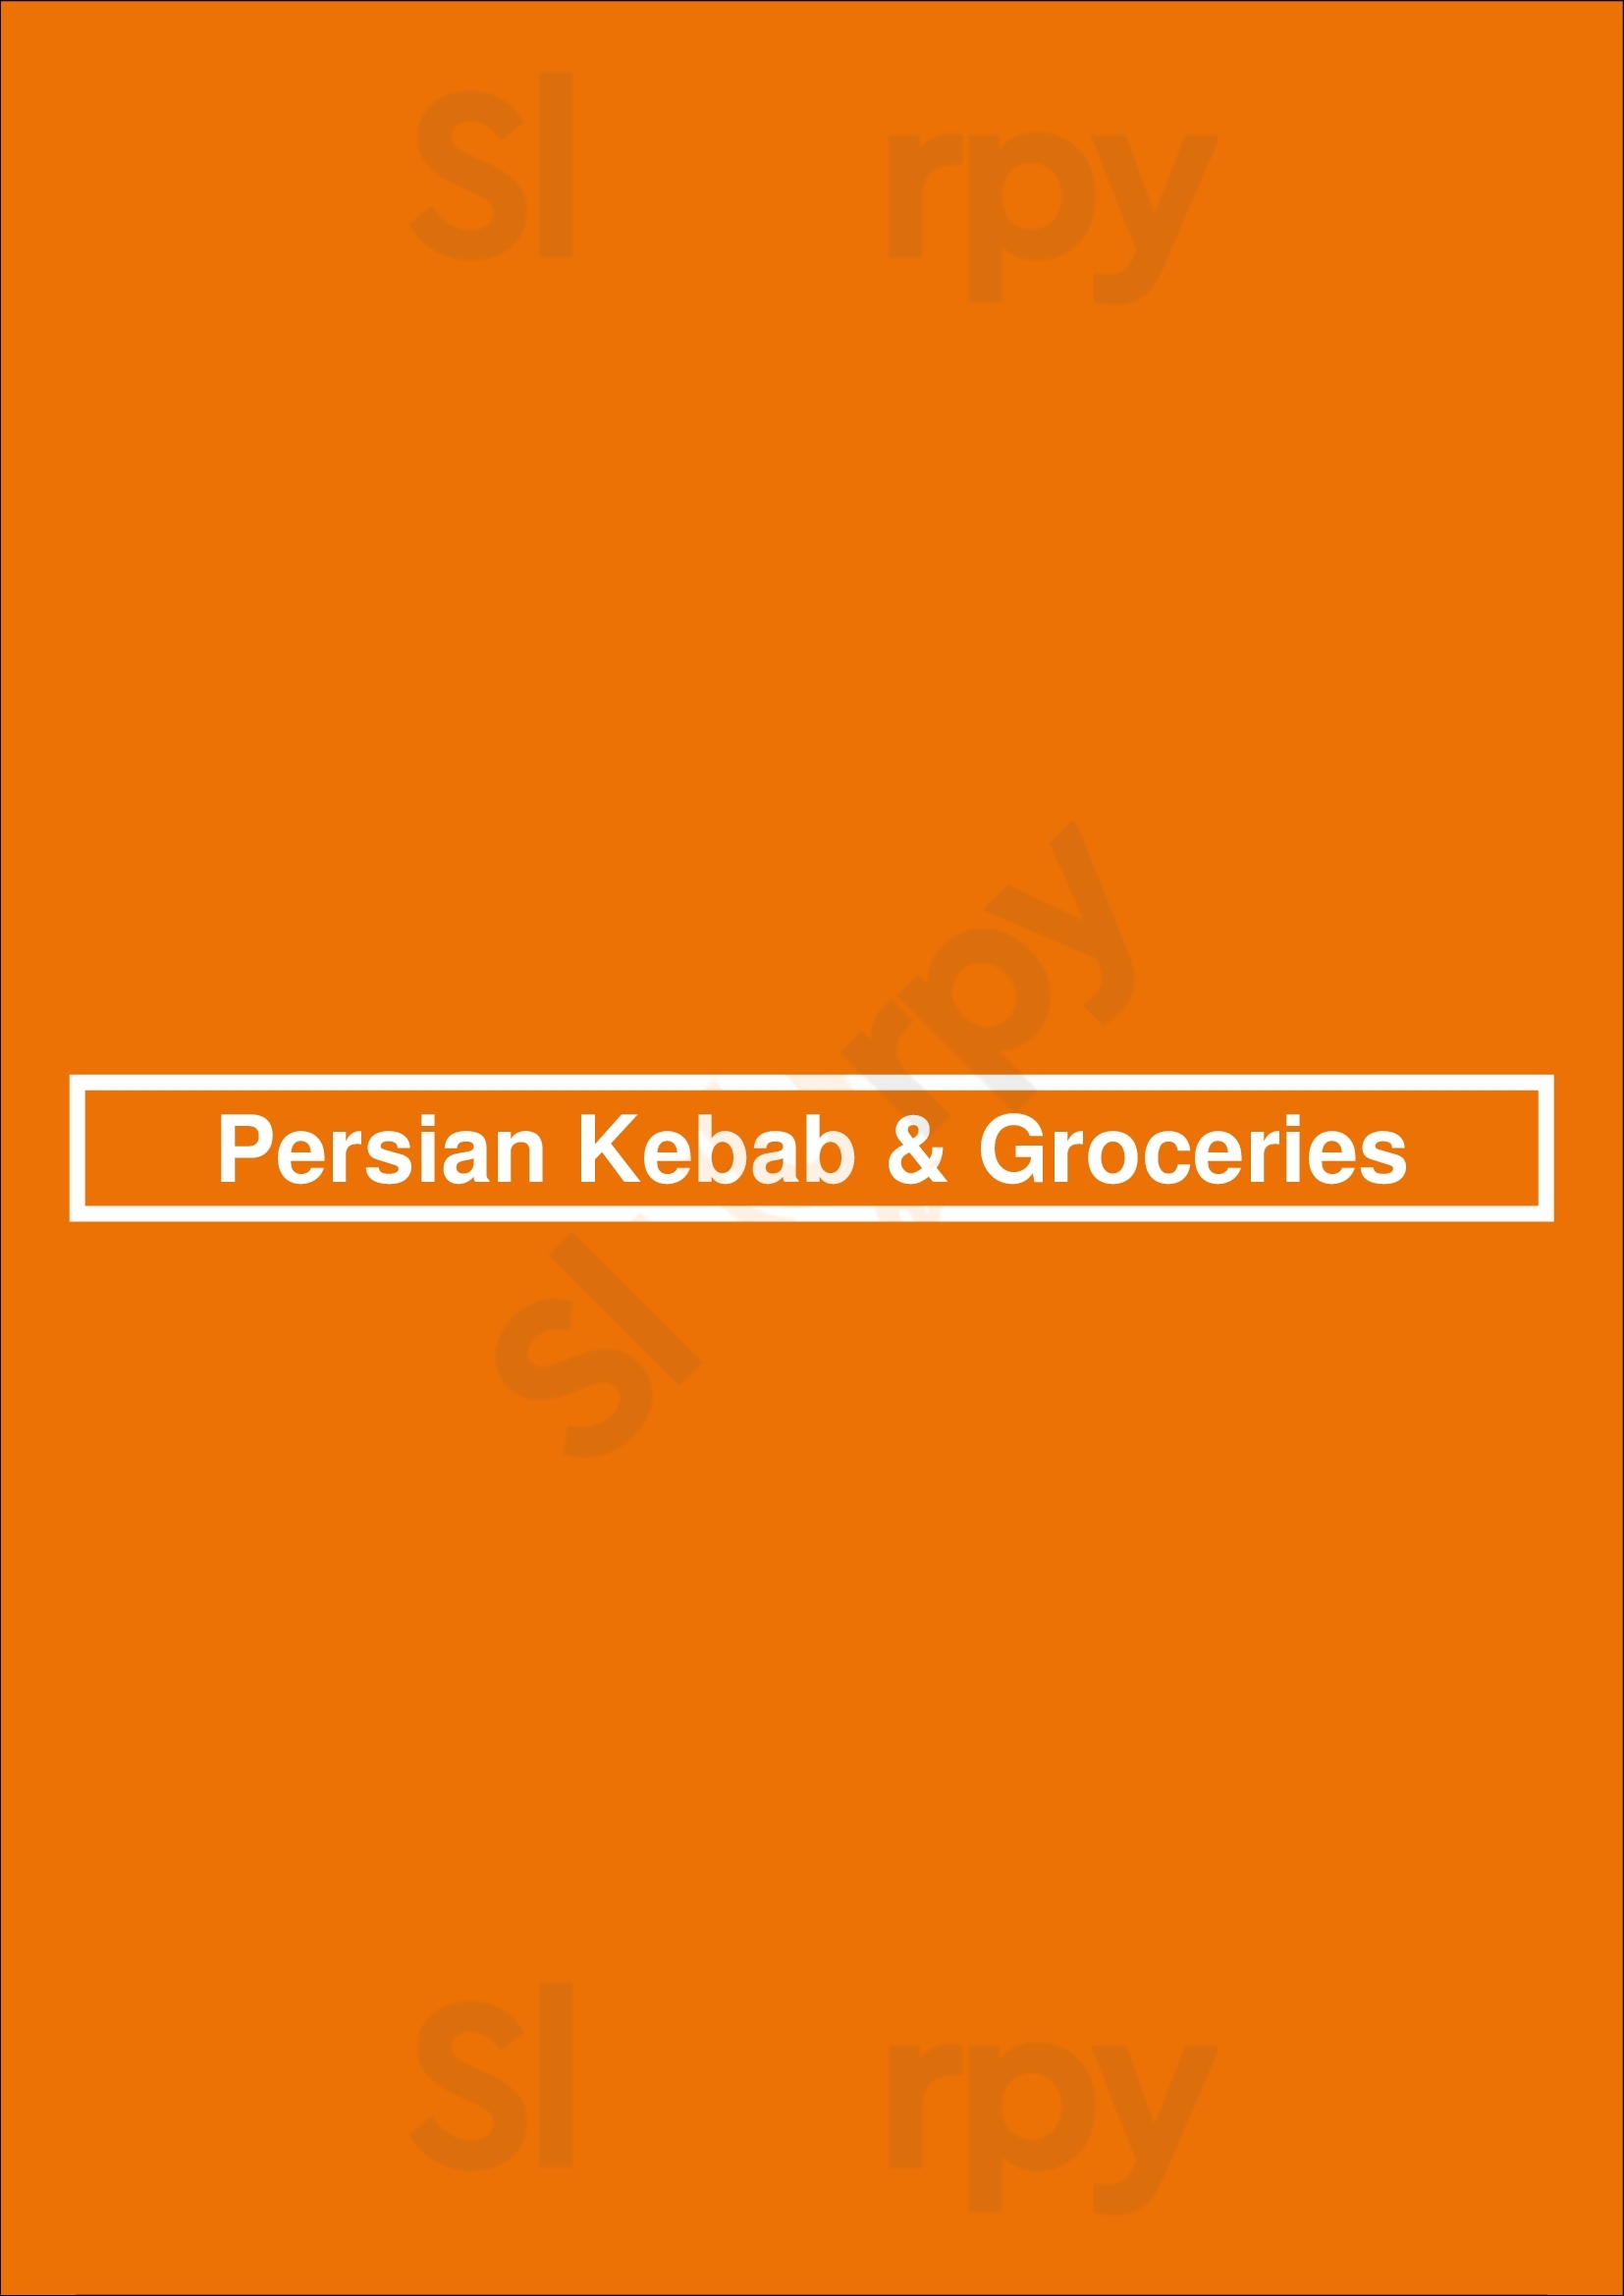 Persian Kebab & Groceries Victoria Menu - 1